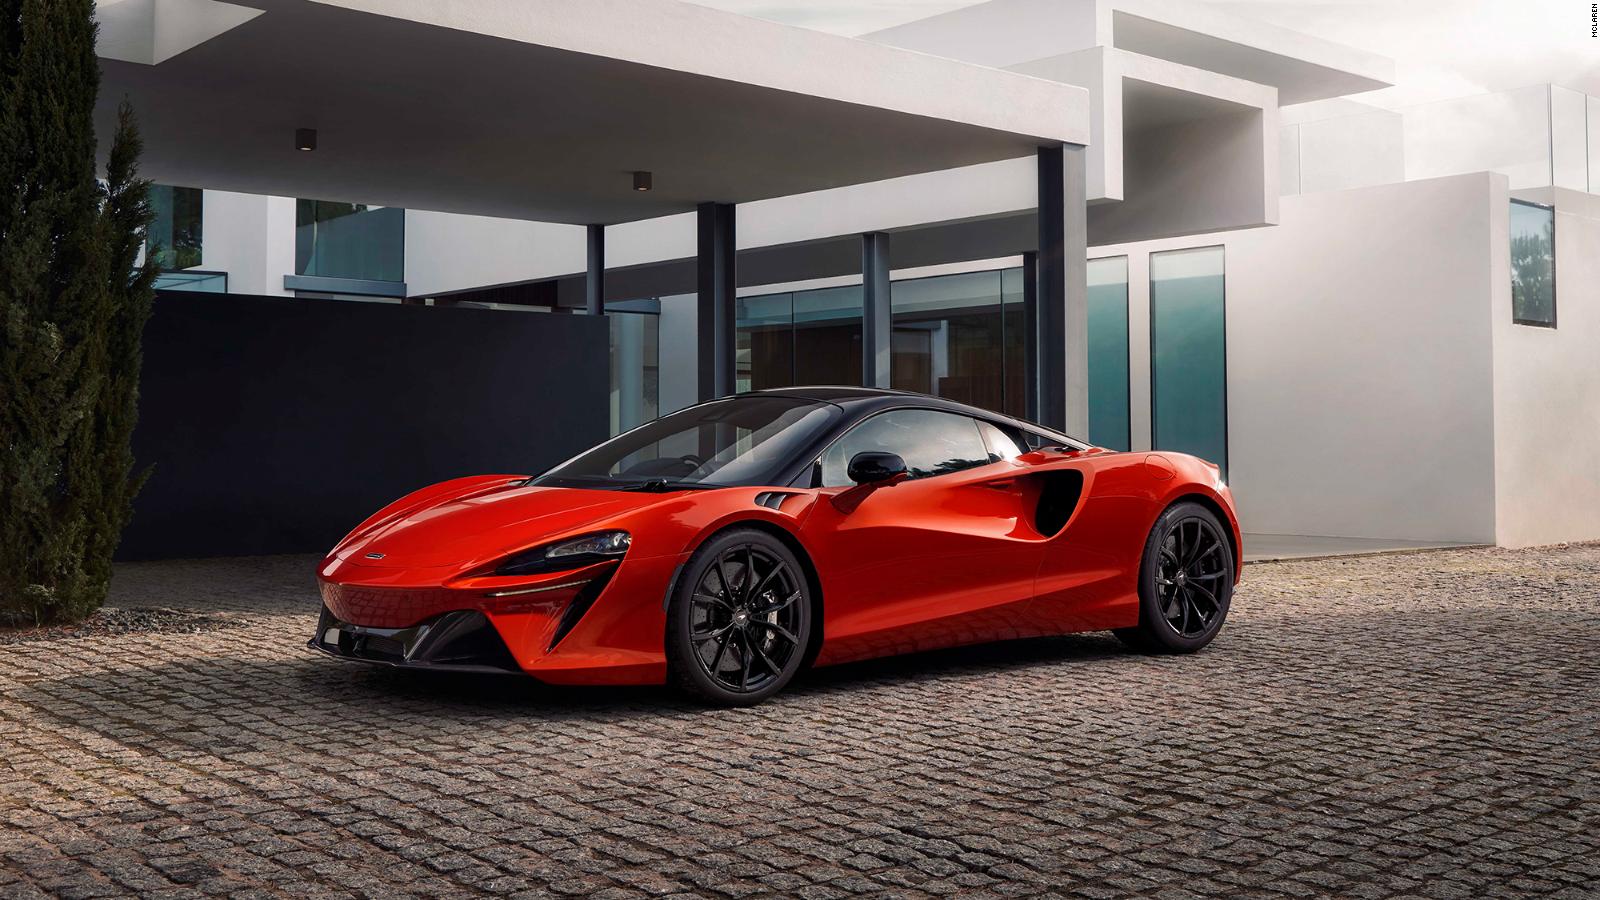 Check out McLaren's new hybrid supercar